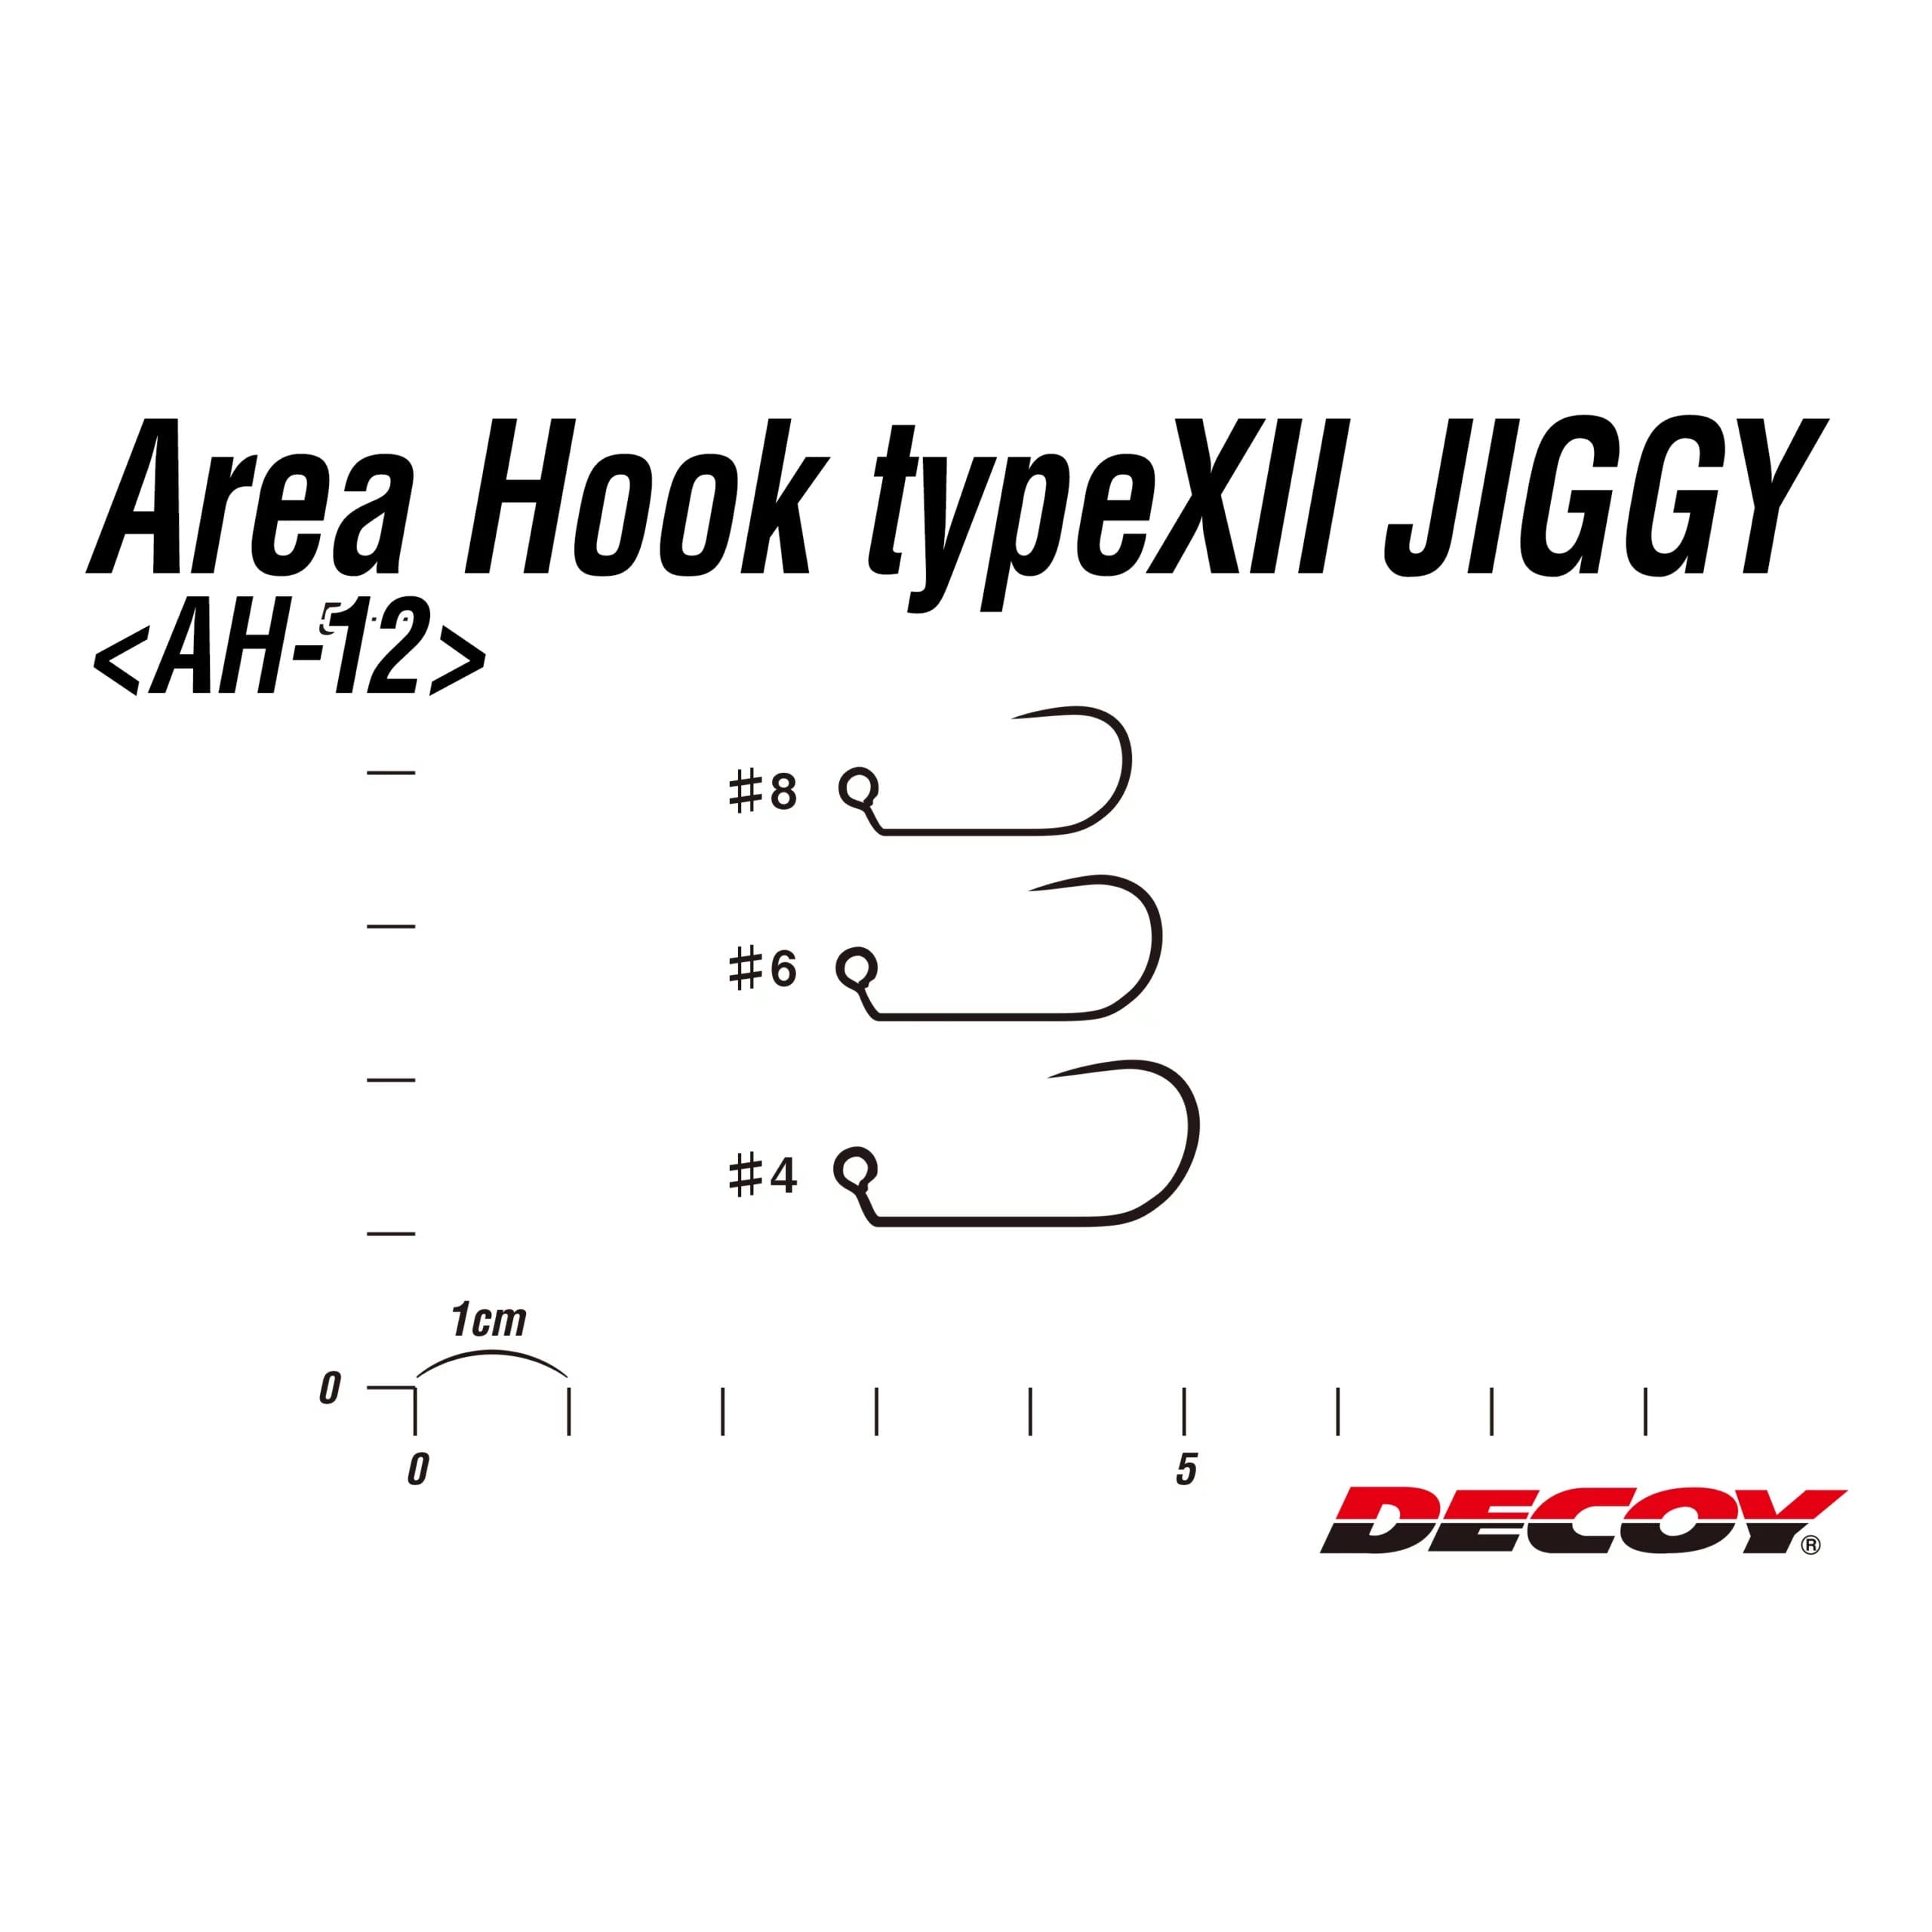 Area 12. Ah-12 area Hook Jiggy. Decoy Ah-12 area Hook Jiggy. Decoy area Hook Type XII Jiggy. Decoy Ah-12 area Hook Jiggy офсетный крючок.